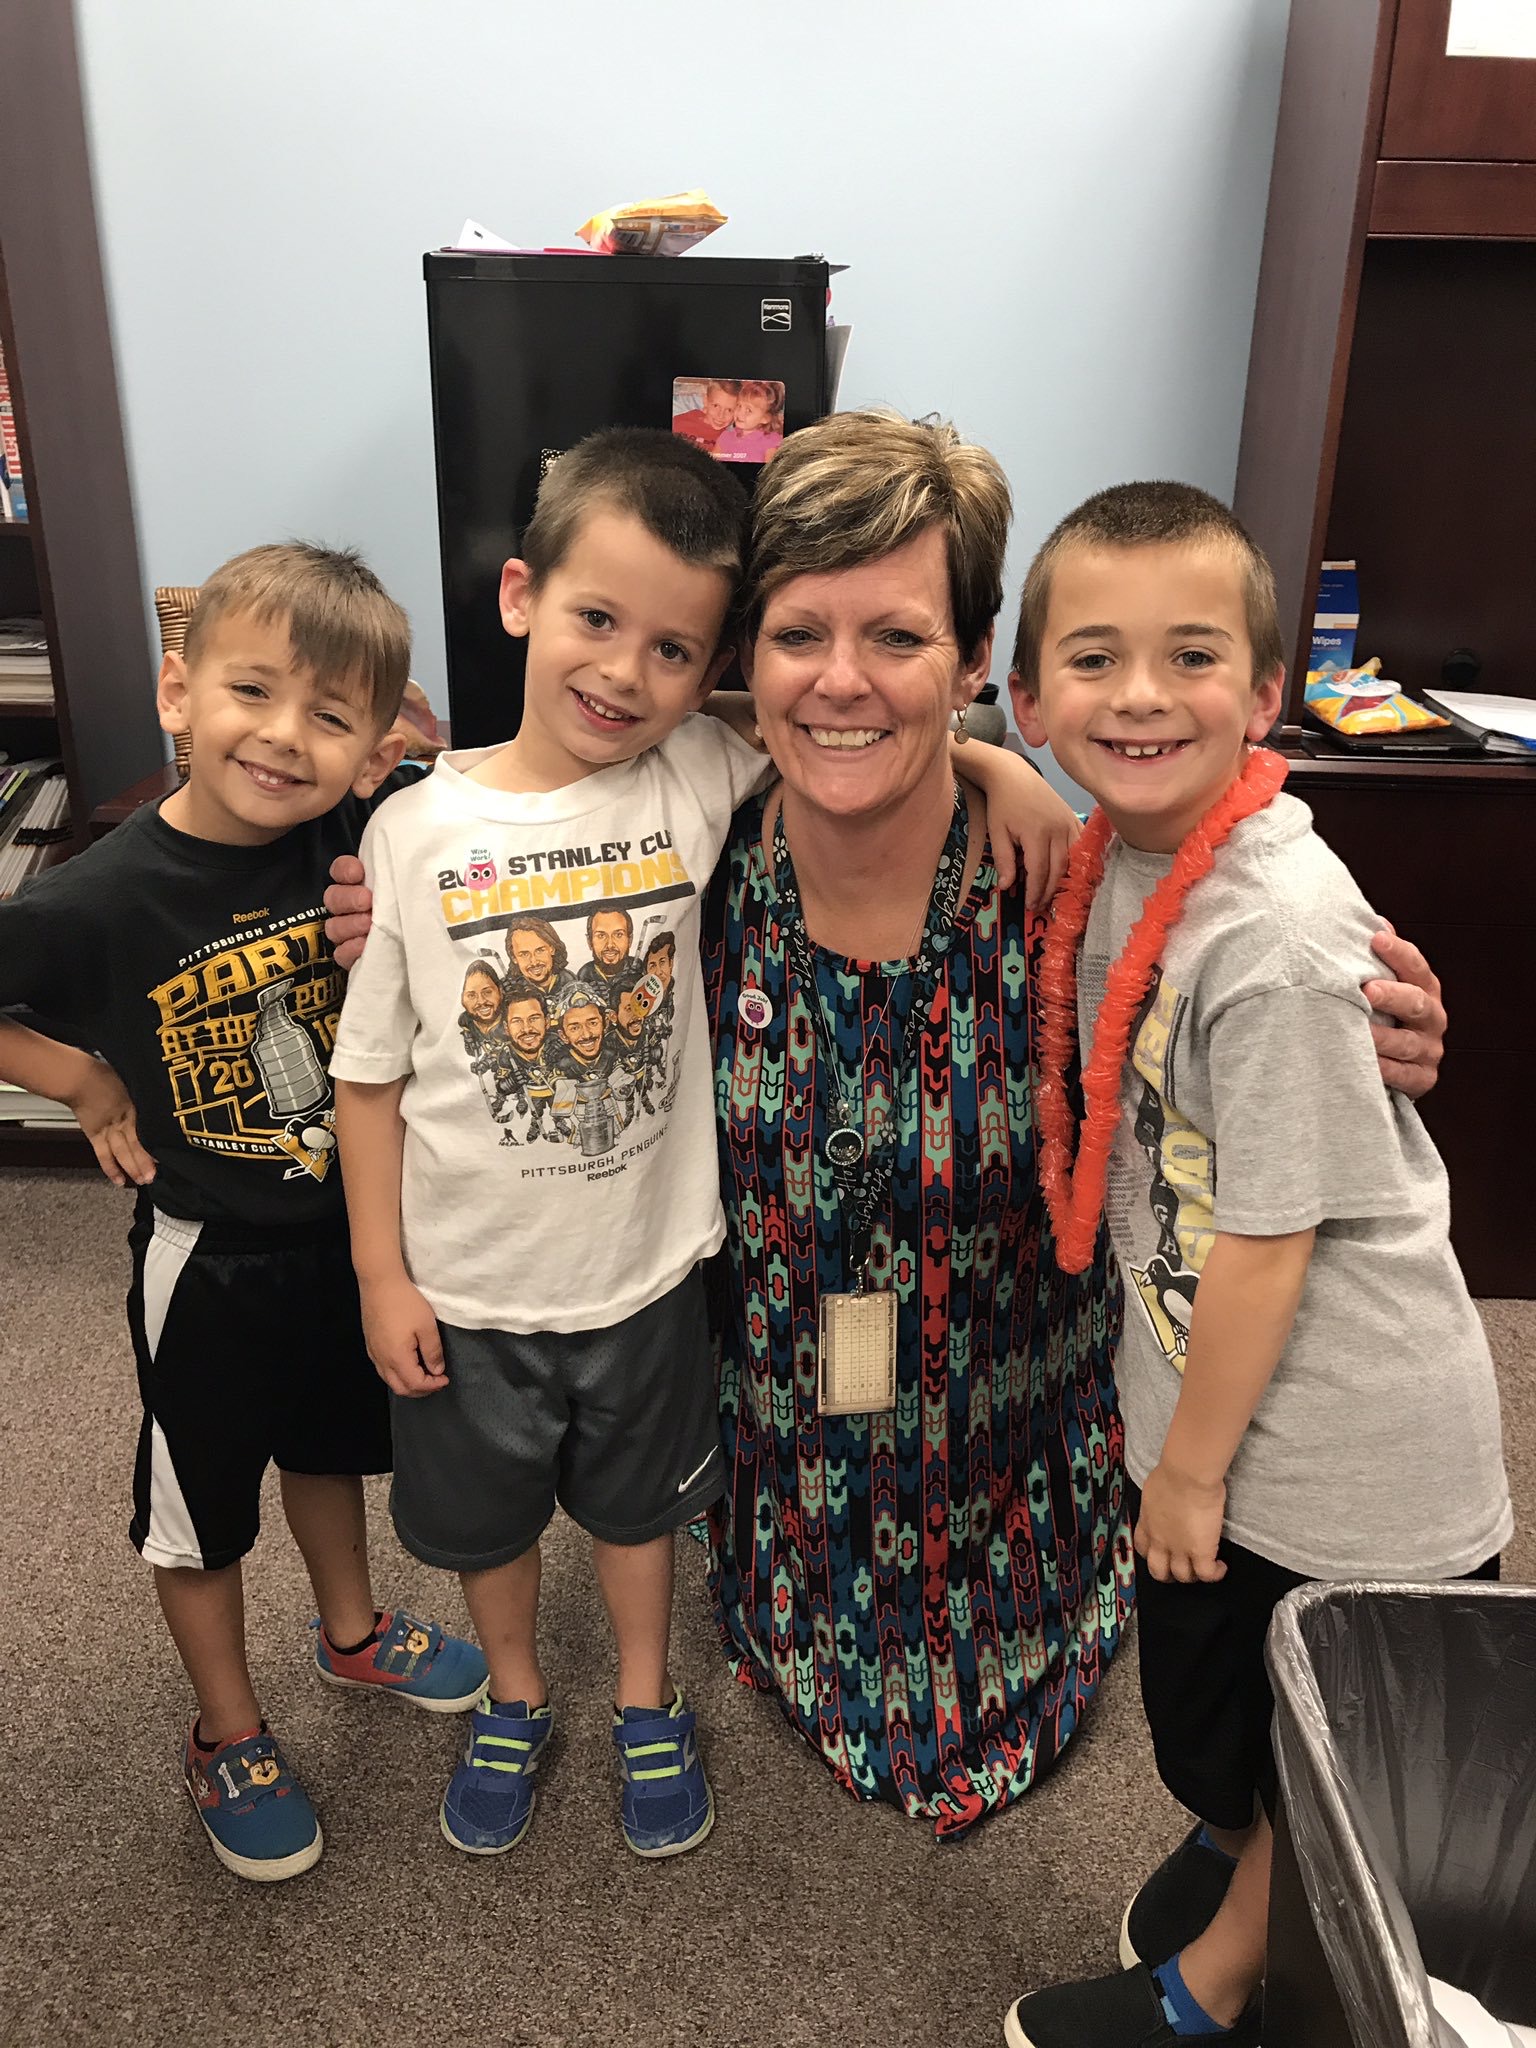 Lisa Koennel standing with three elementary school boys